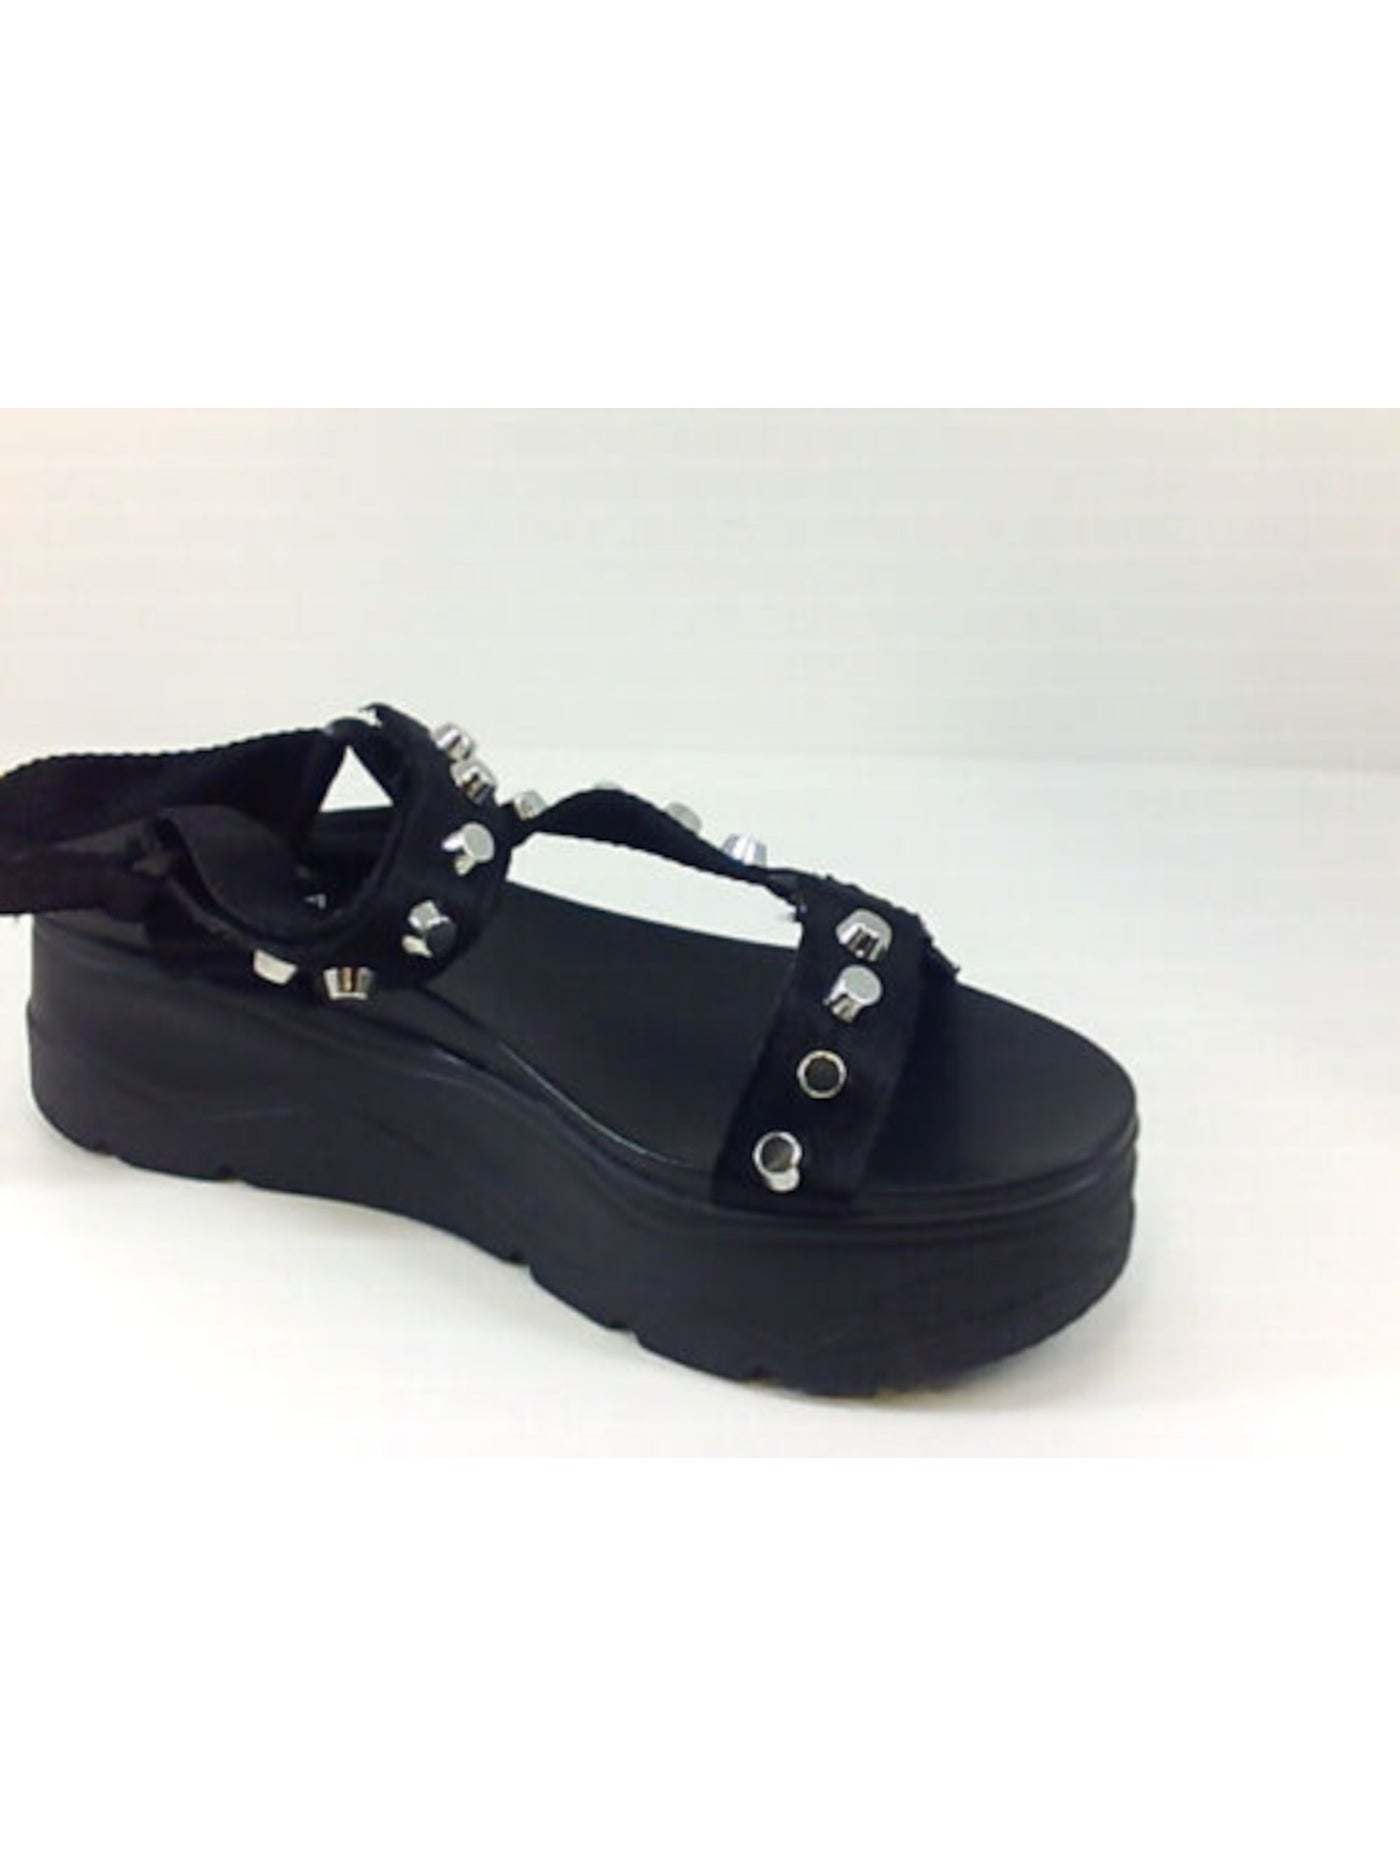 AQUA Womens Black Adjustable Studded Strappy Sun Round Toe Platform Slingback Sandal M